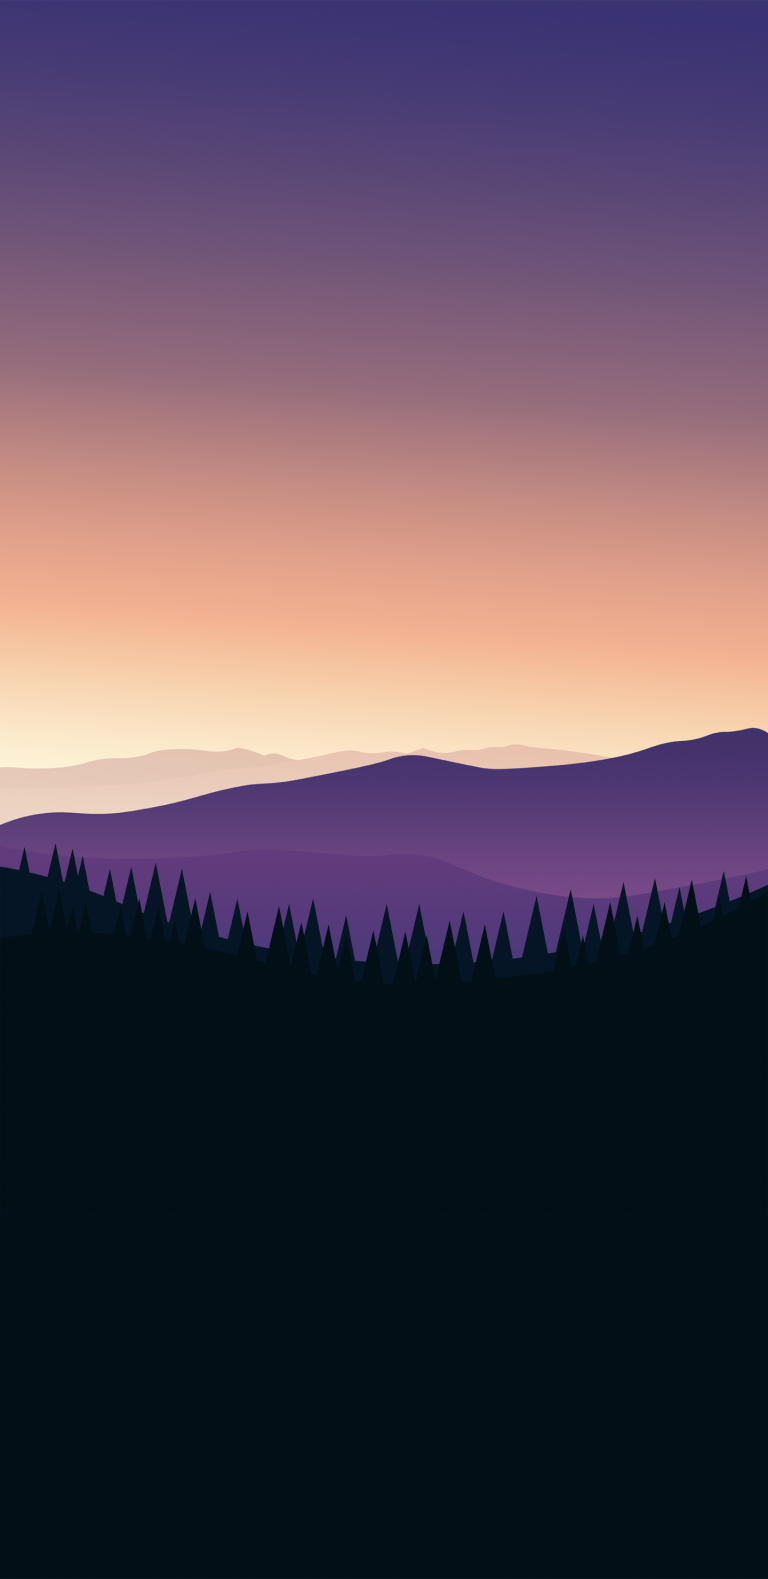 V15ByArthur1992aS-iphone-mountain-wallpaper-sunset-orange-purple-trees-768×1579